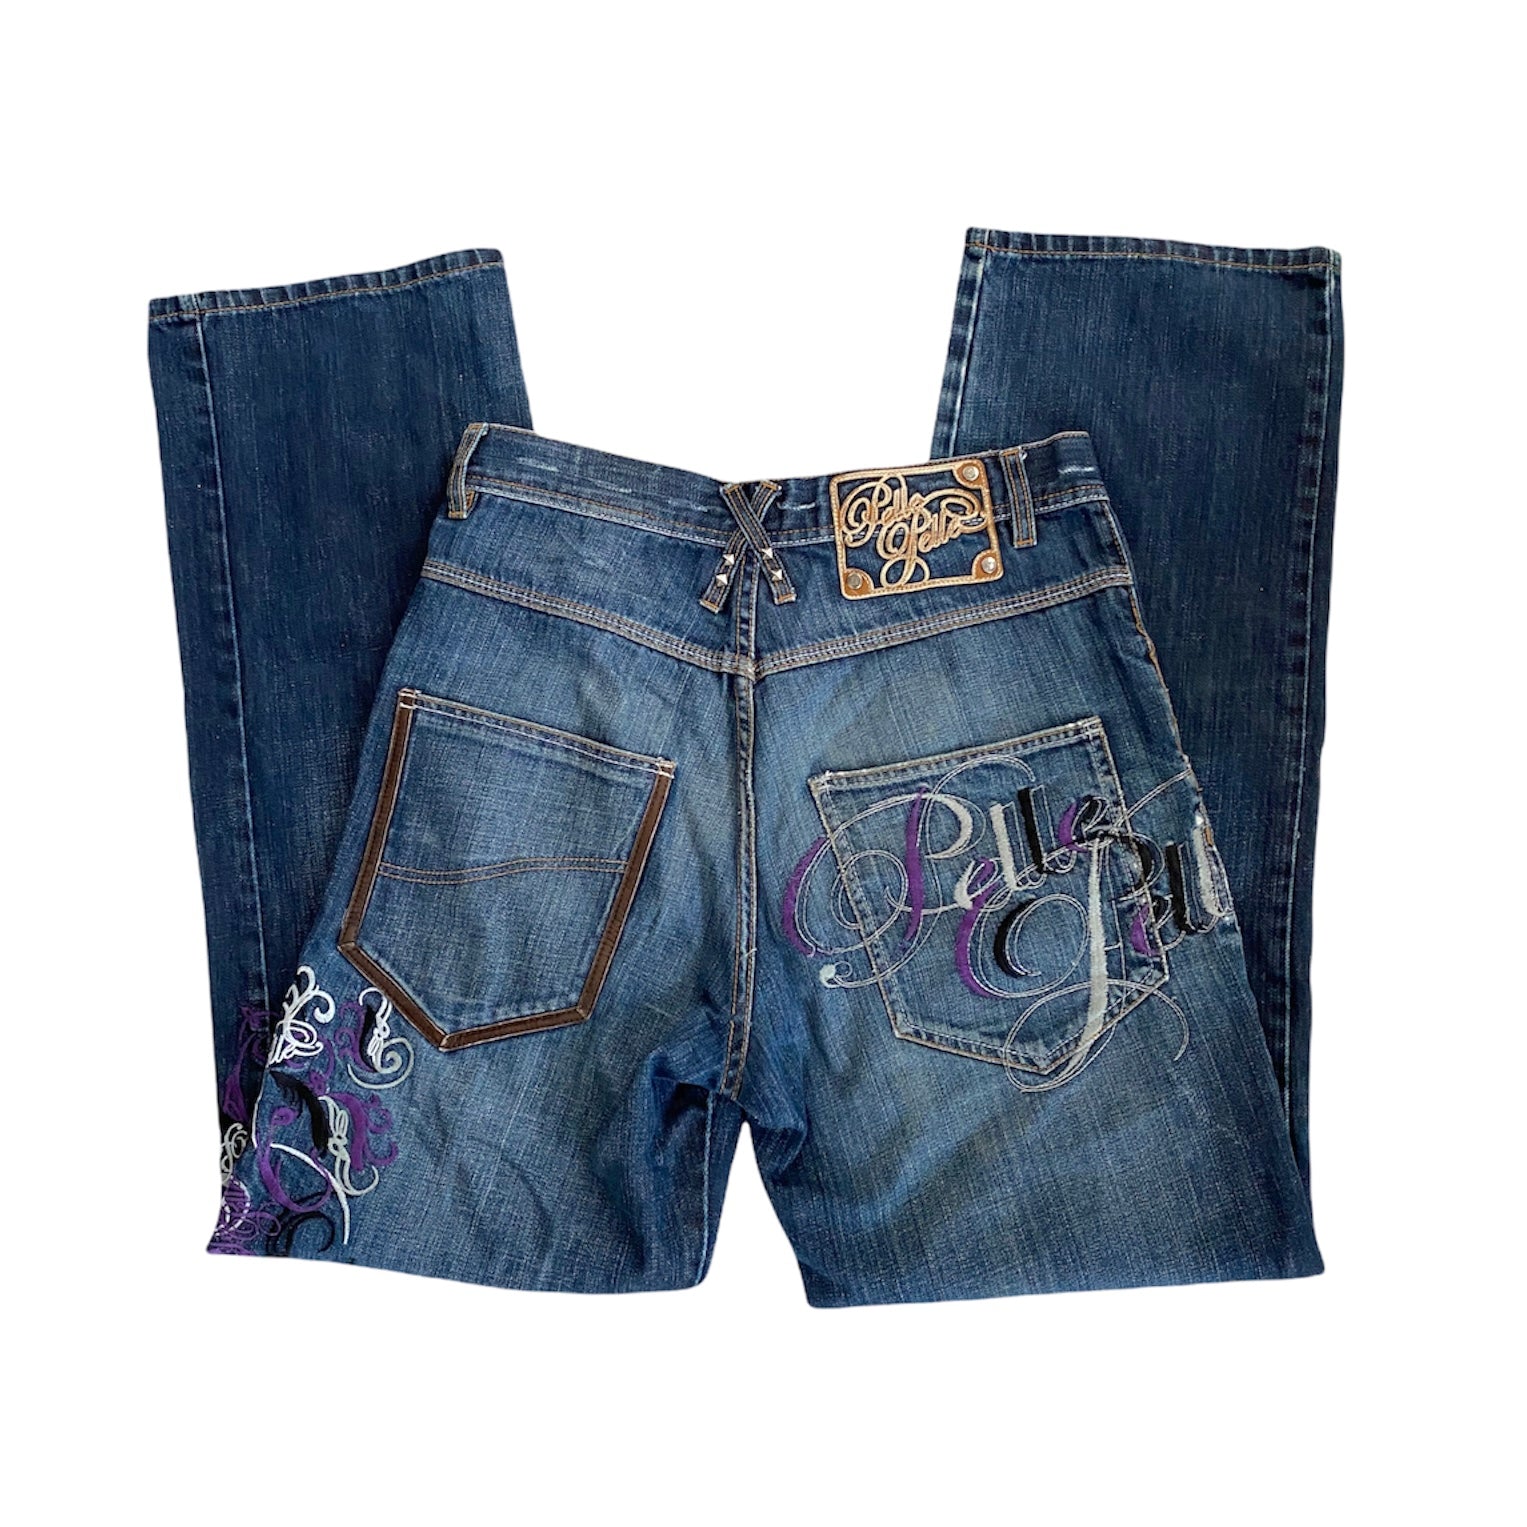 Måge frekvens Svaghed Pelle Pelle Embroidered Baggy Jeans – 2ndaddictz